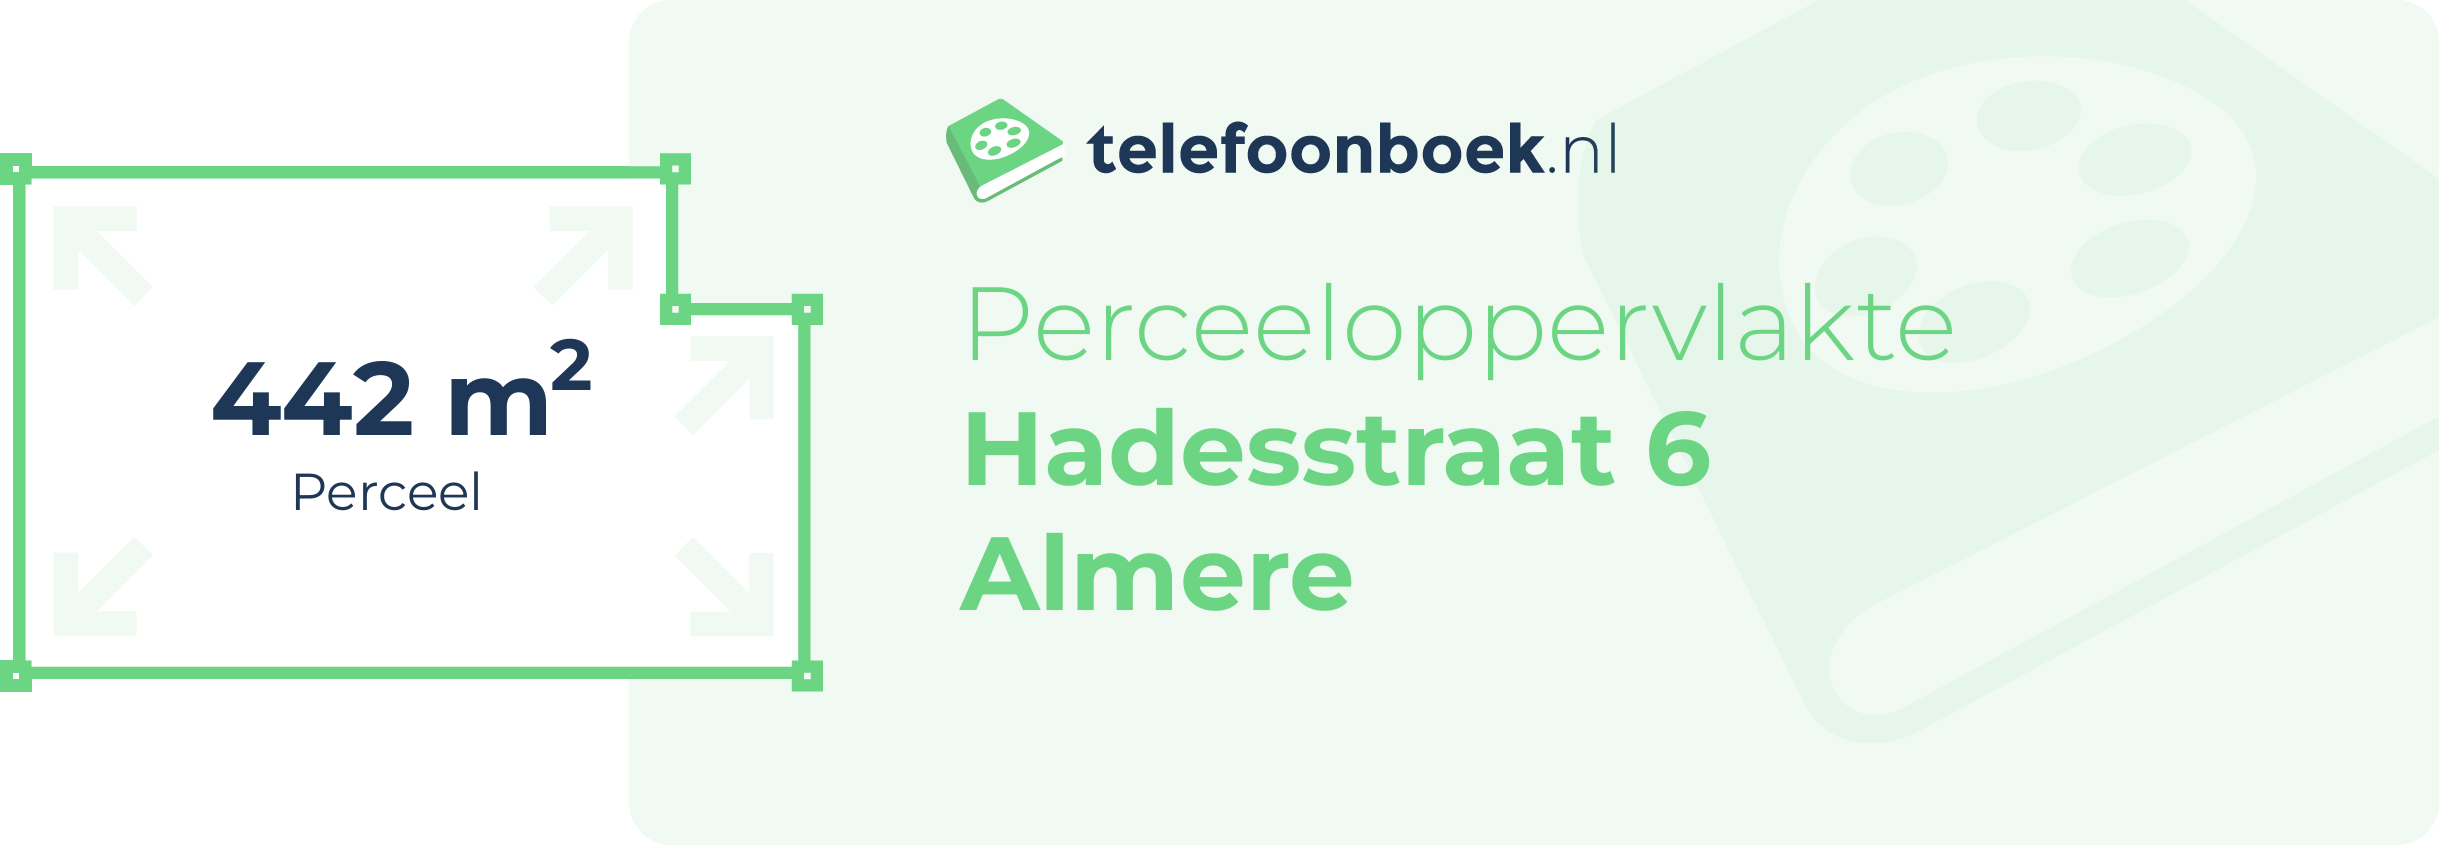 Perceeloppervlakte Hadesstraat 6 Almere